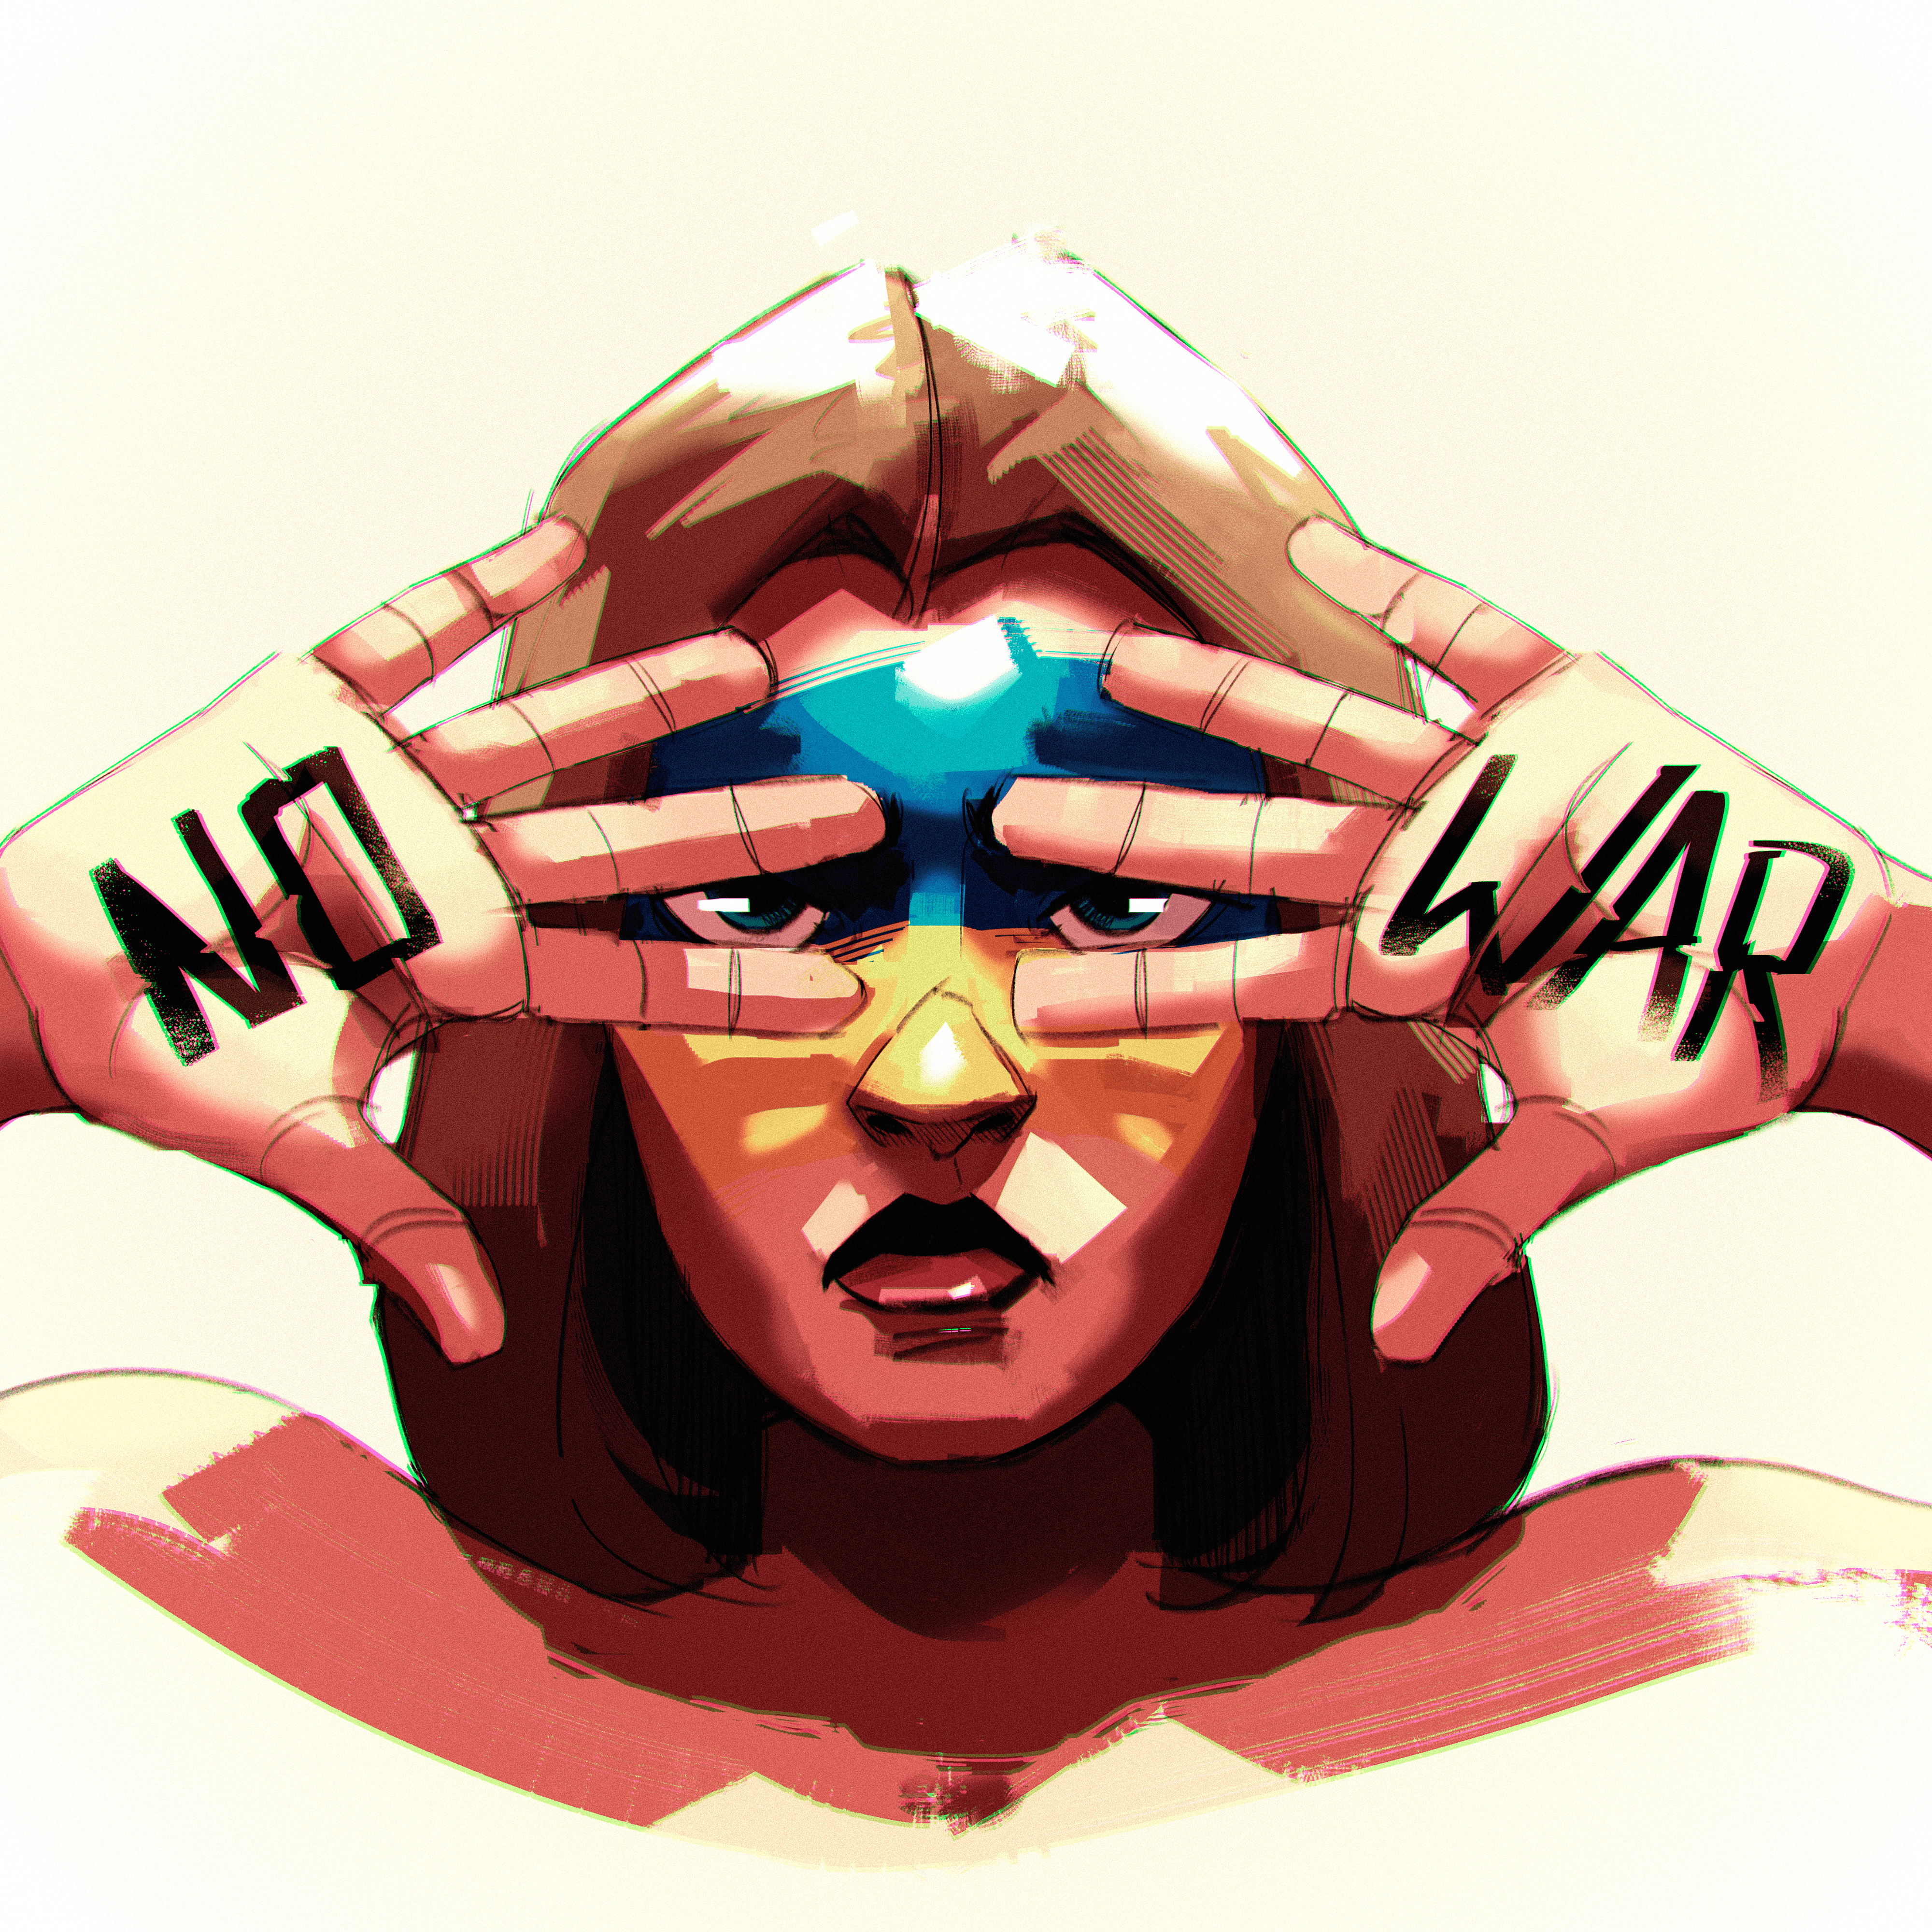 UkraineArtCo - No War